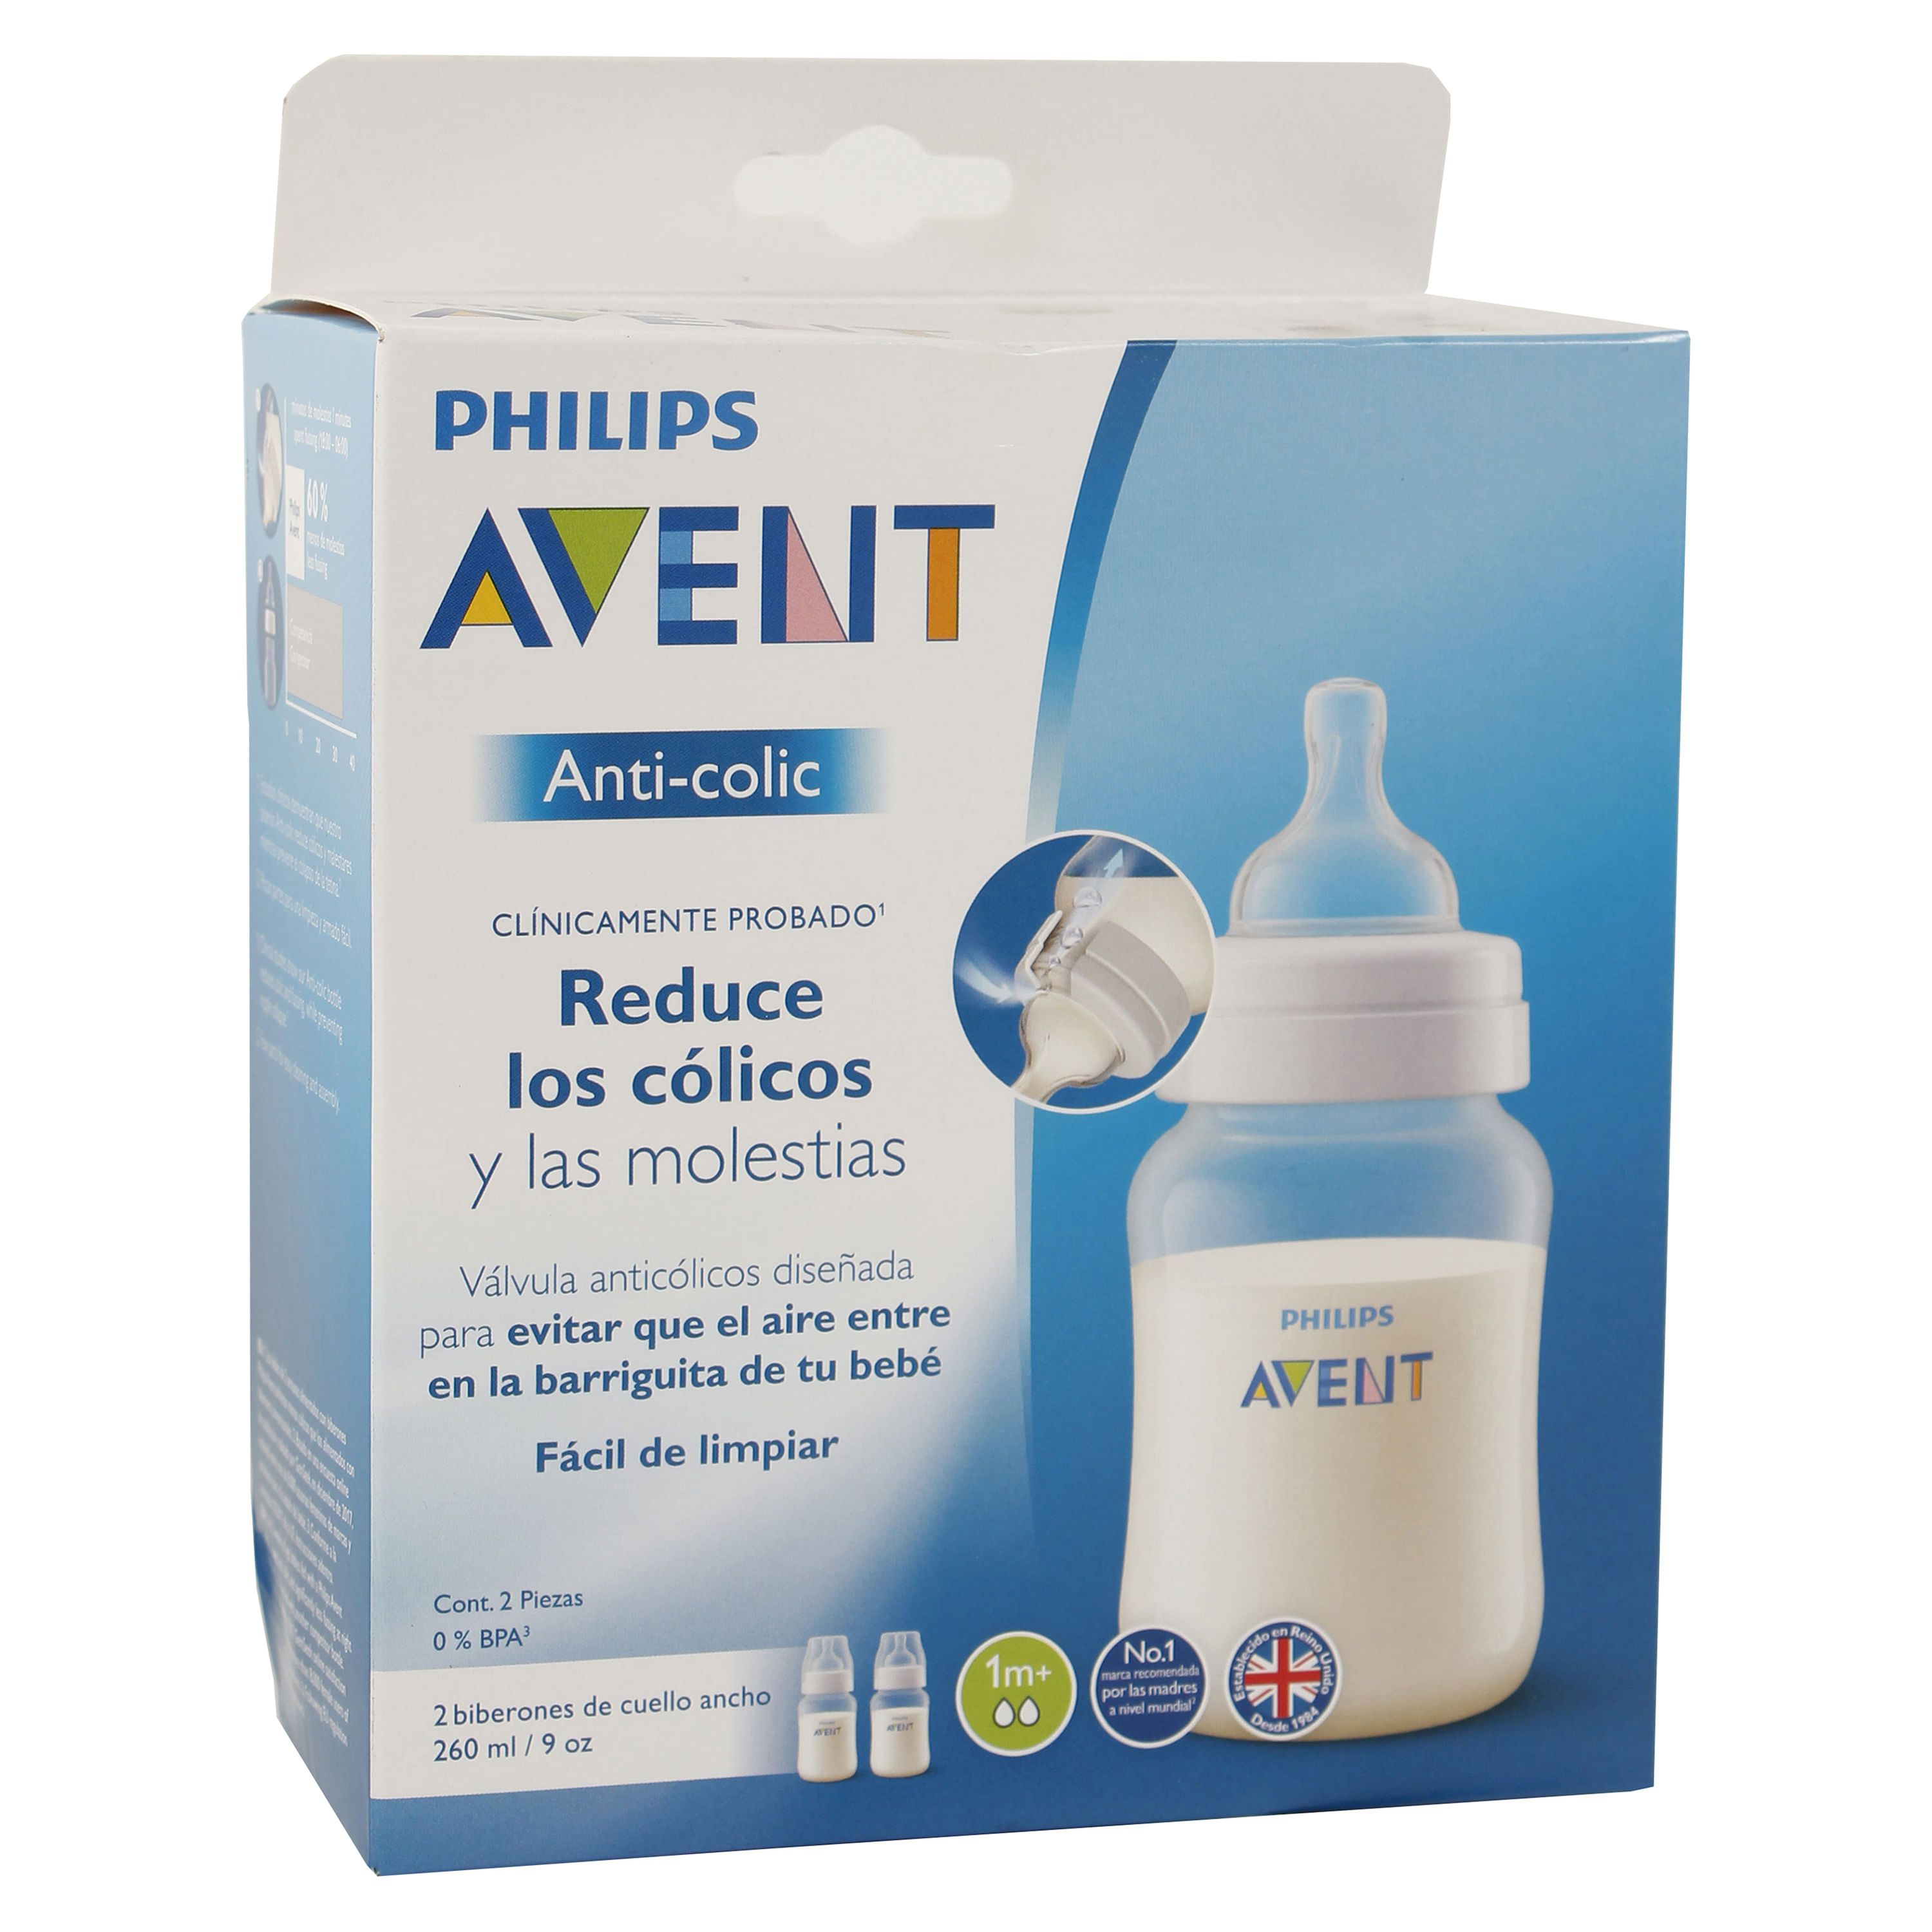 Philips Avent - Biberón natural (paquete de 3) : Bebés 